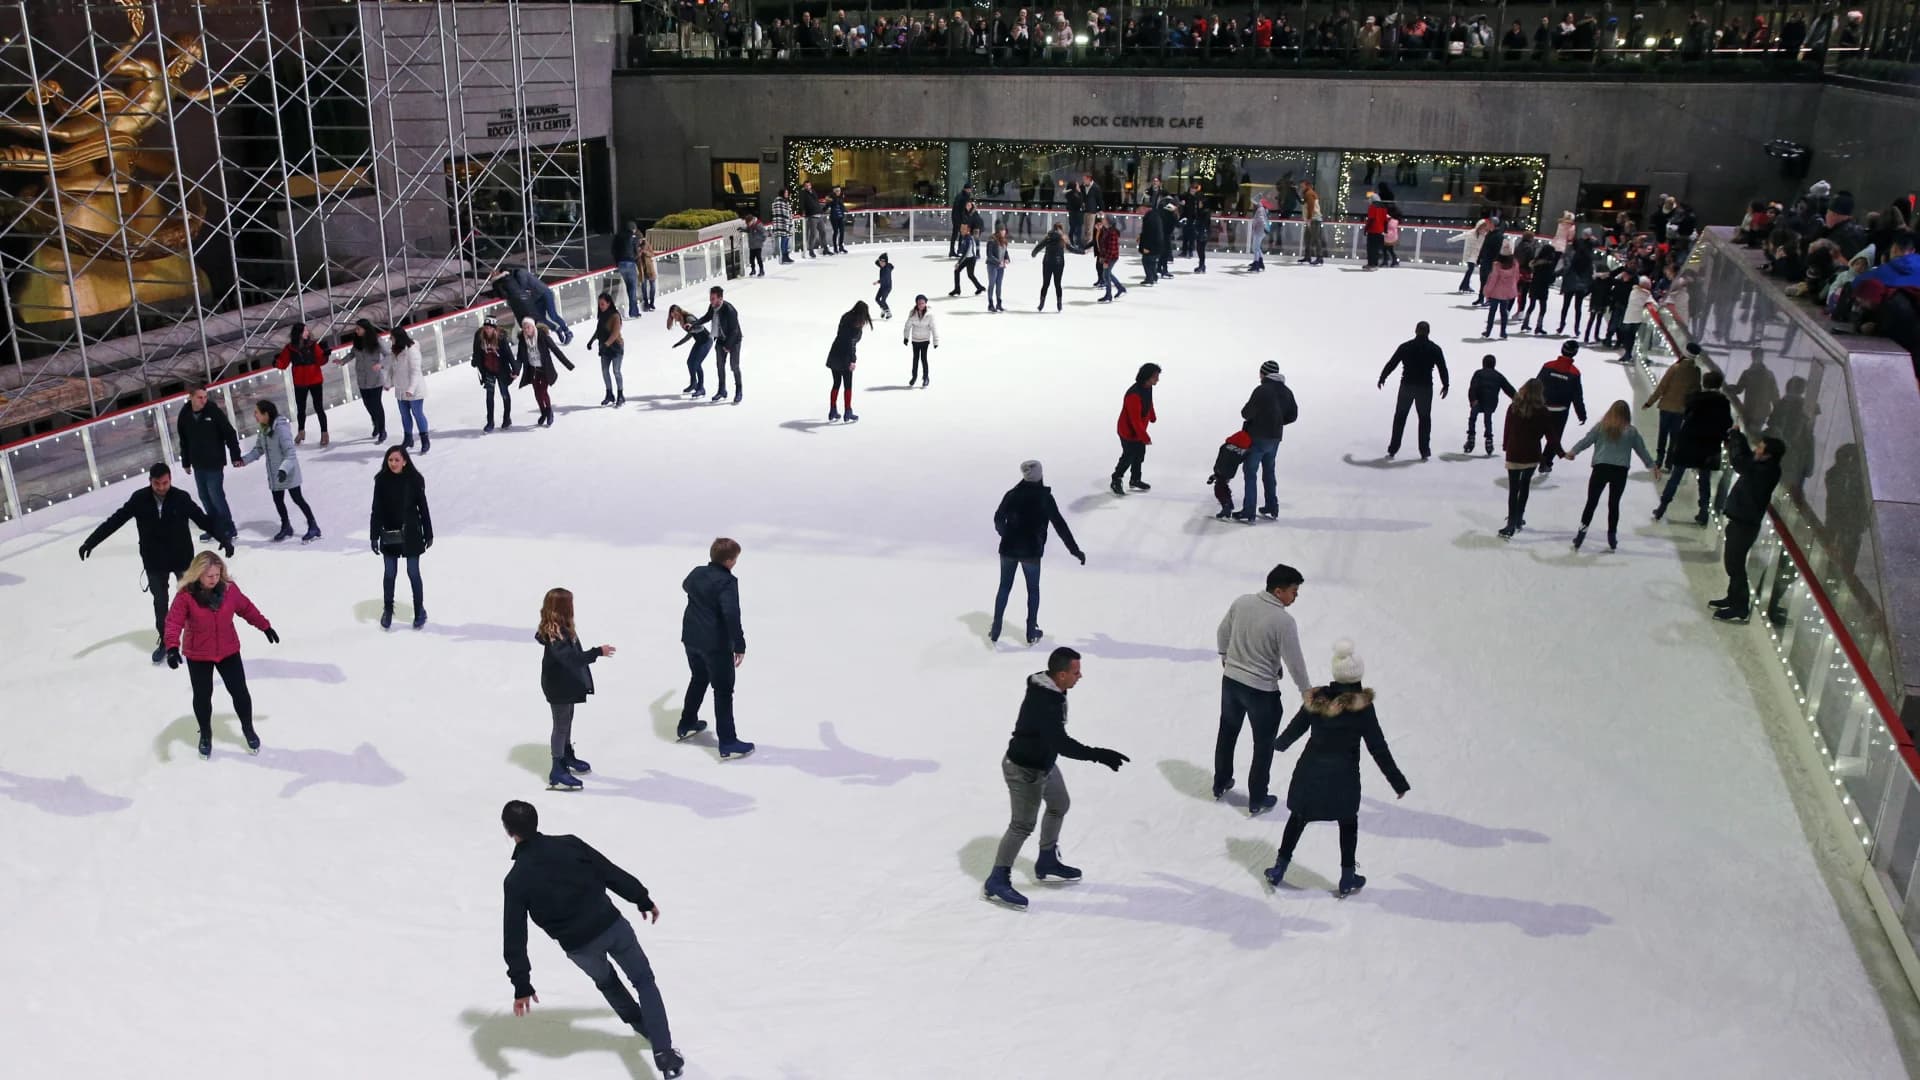 Skates (and masks) on! Rockefeller Center ice rink opens